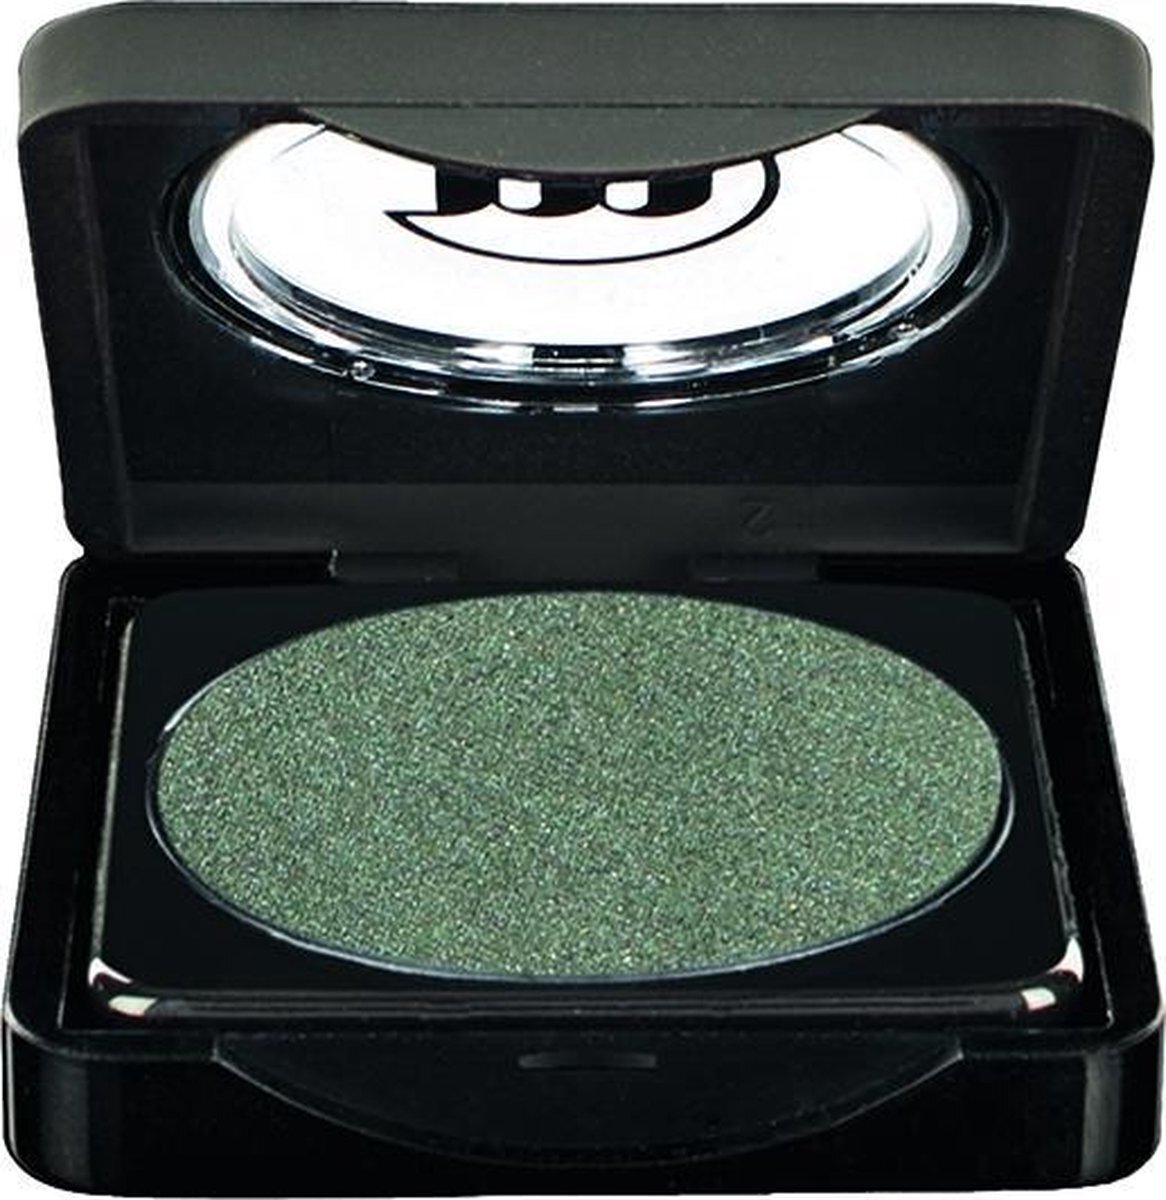 Make-up Studio Eyeshadow Super Frost - Stunning Green